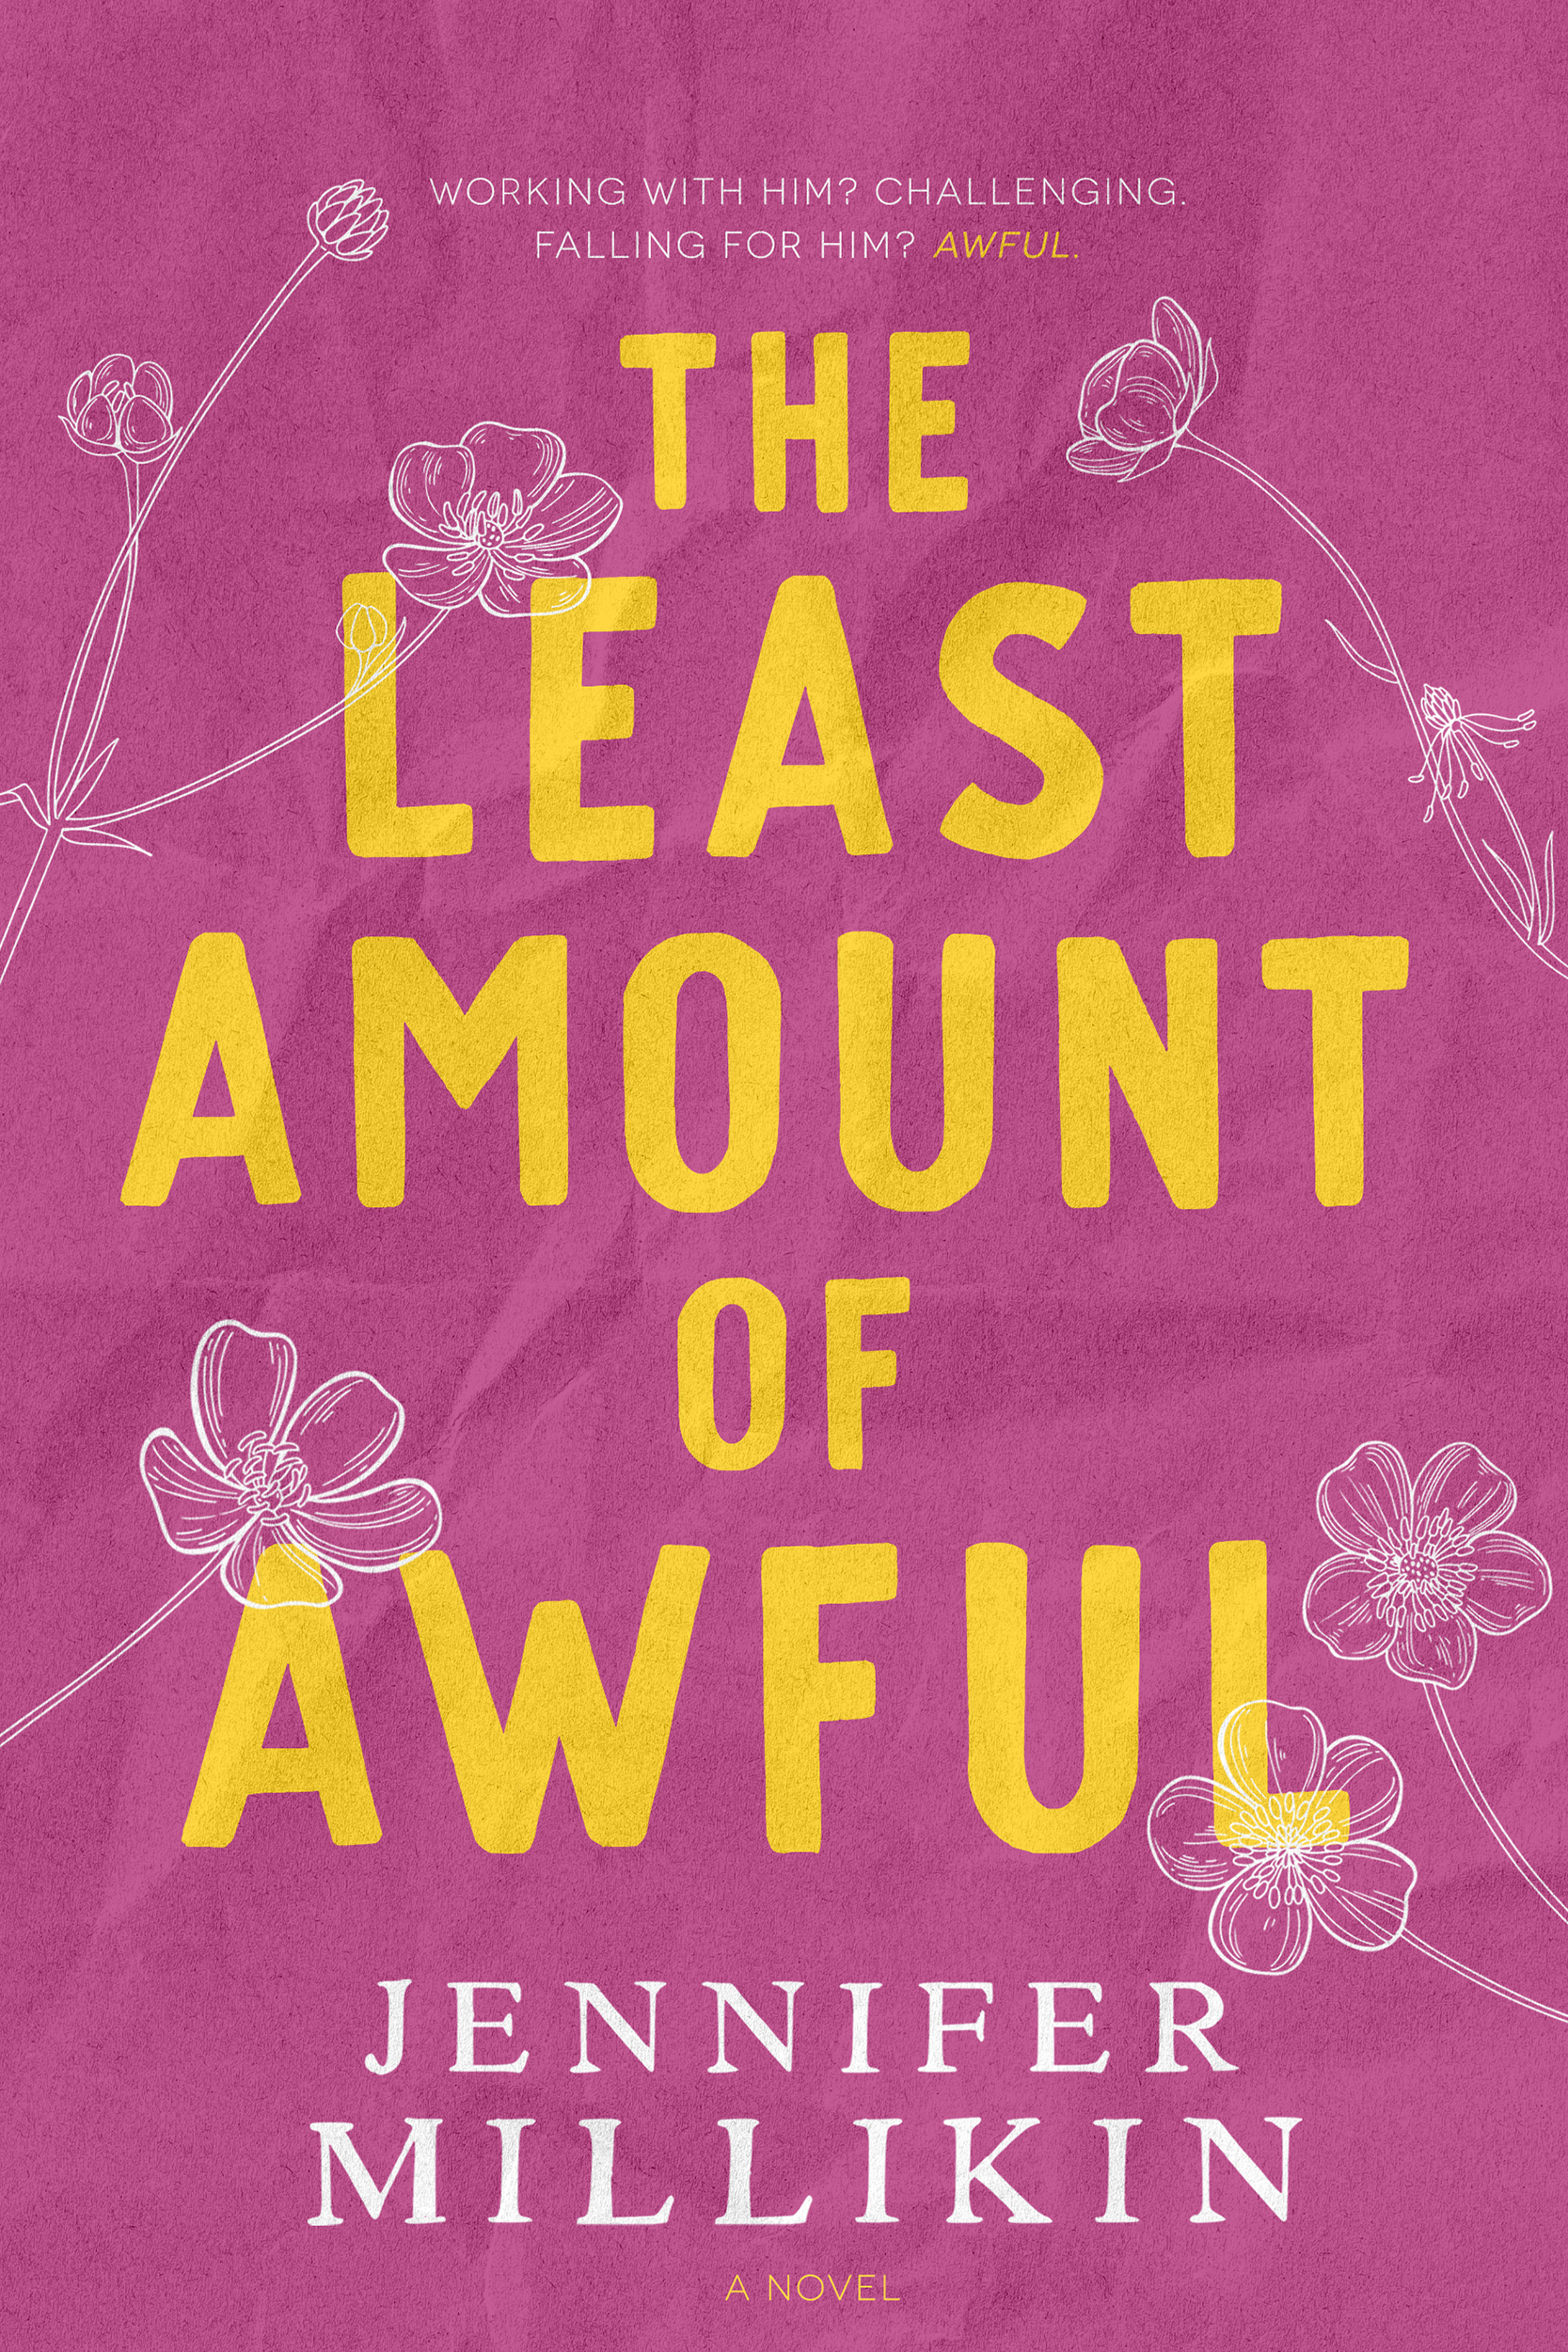 The Least Amount Of Awful by Jennifer Millikin PDF Download